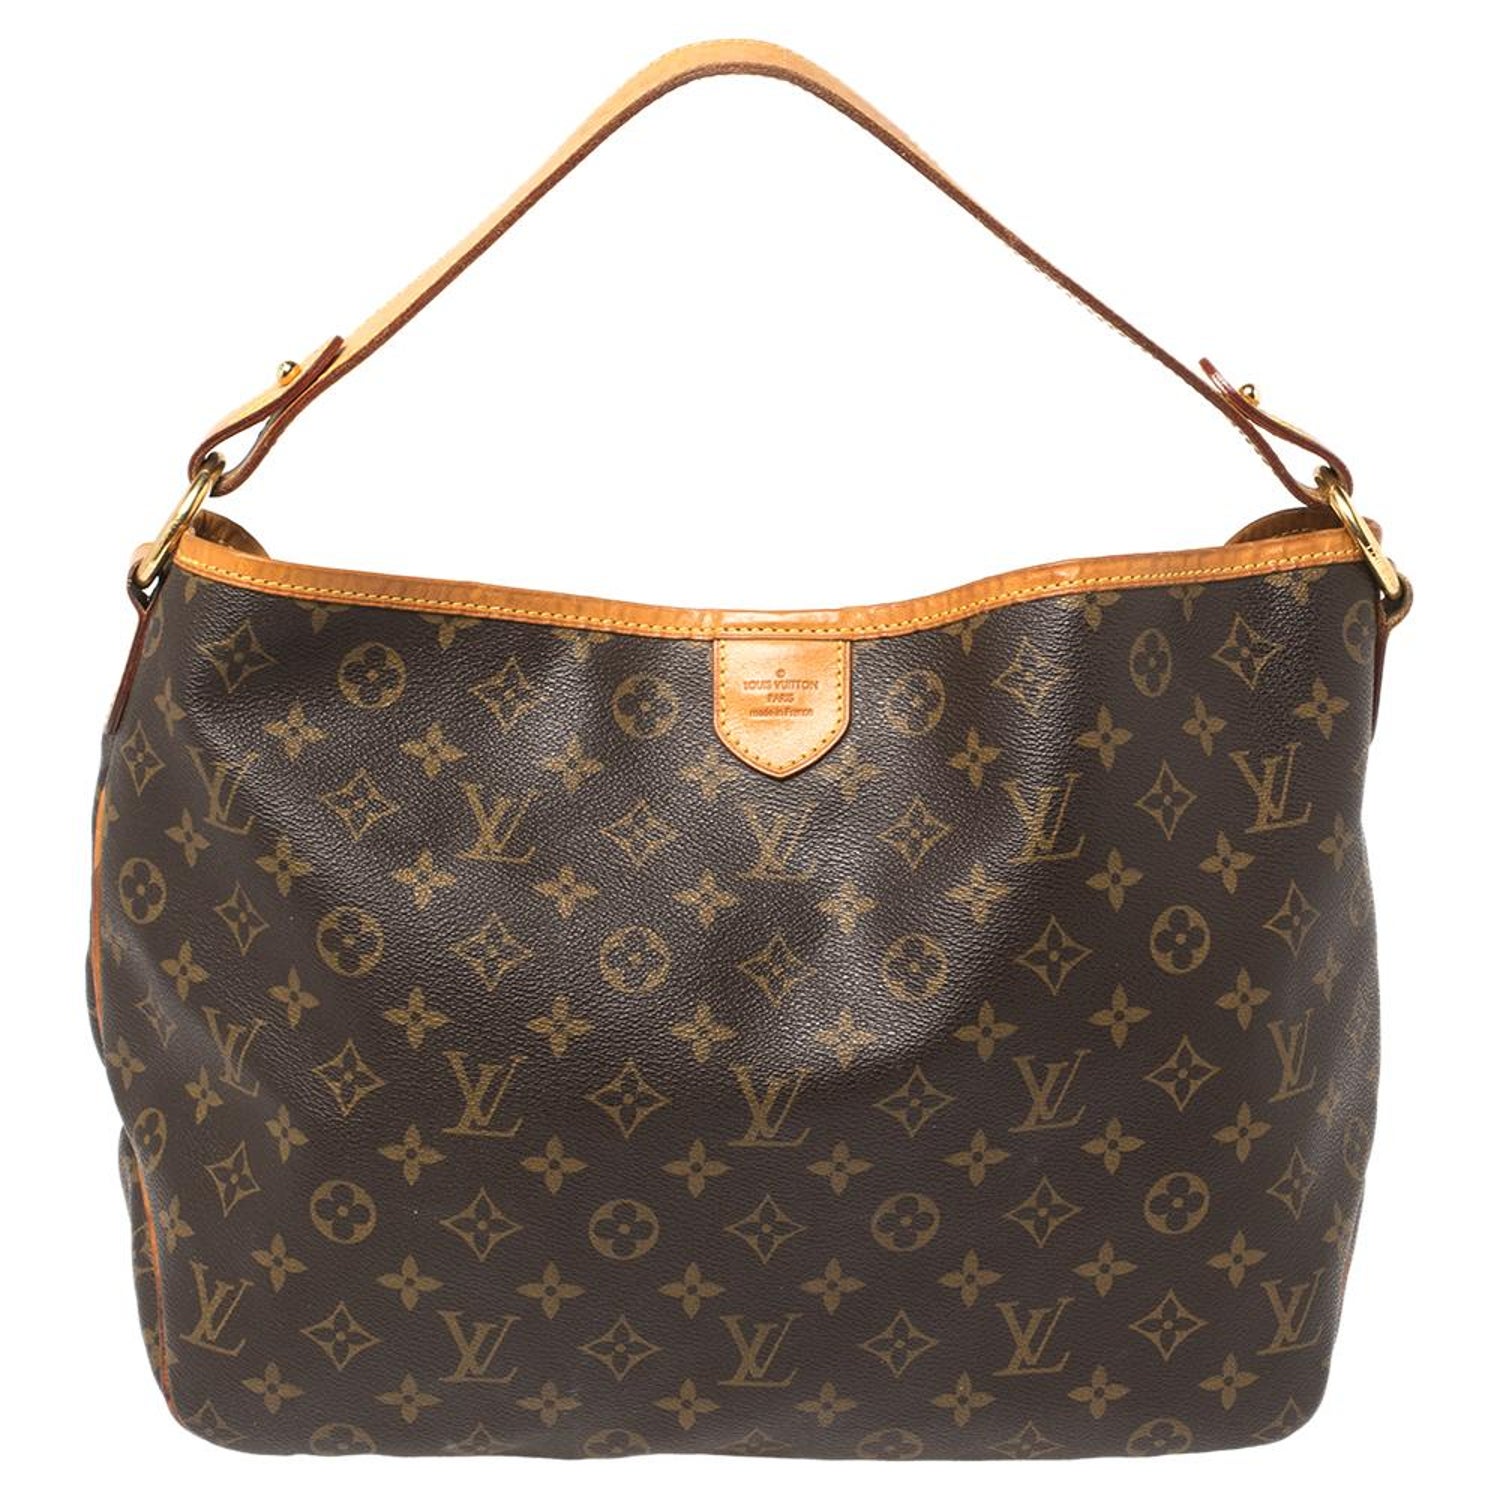 Louis Vuitton Delightful Nm Damier Ebene PM Brown Bag